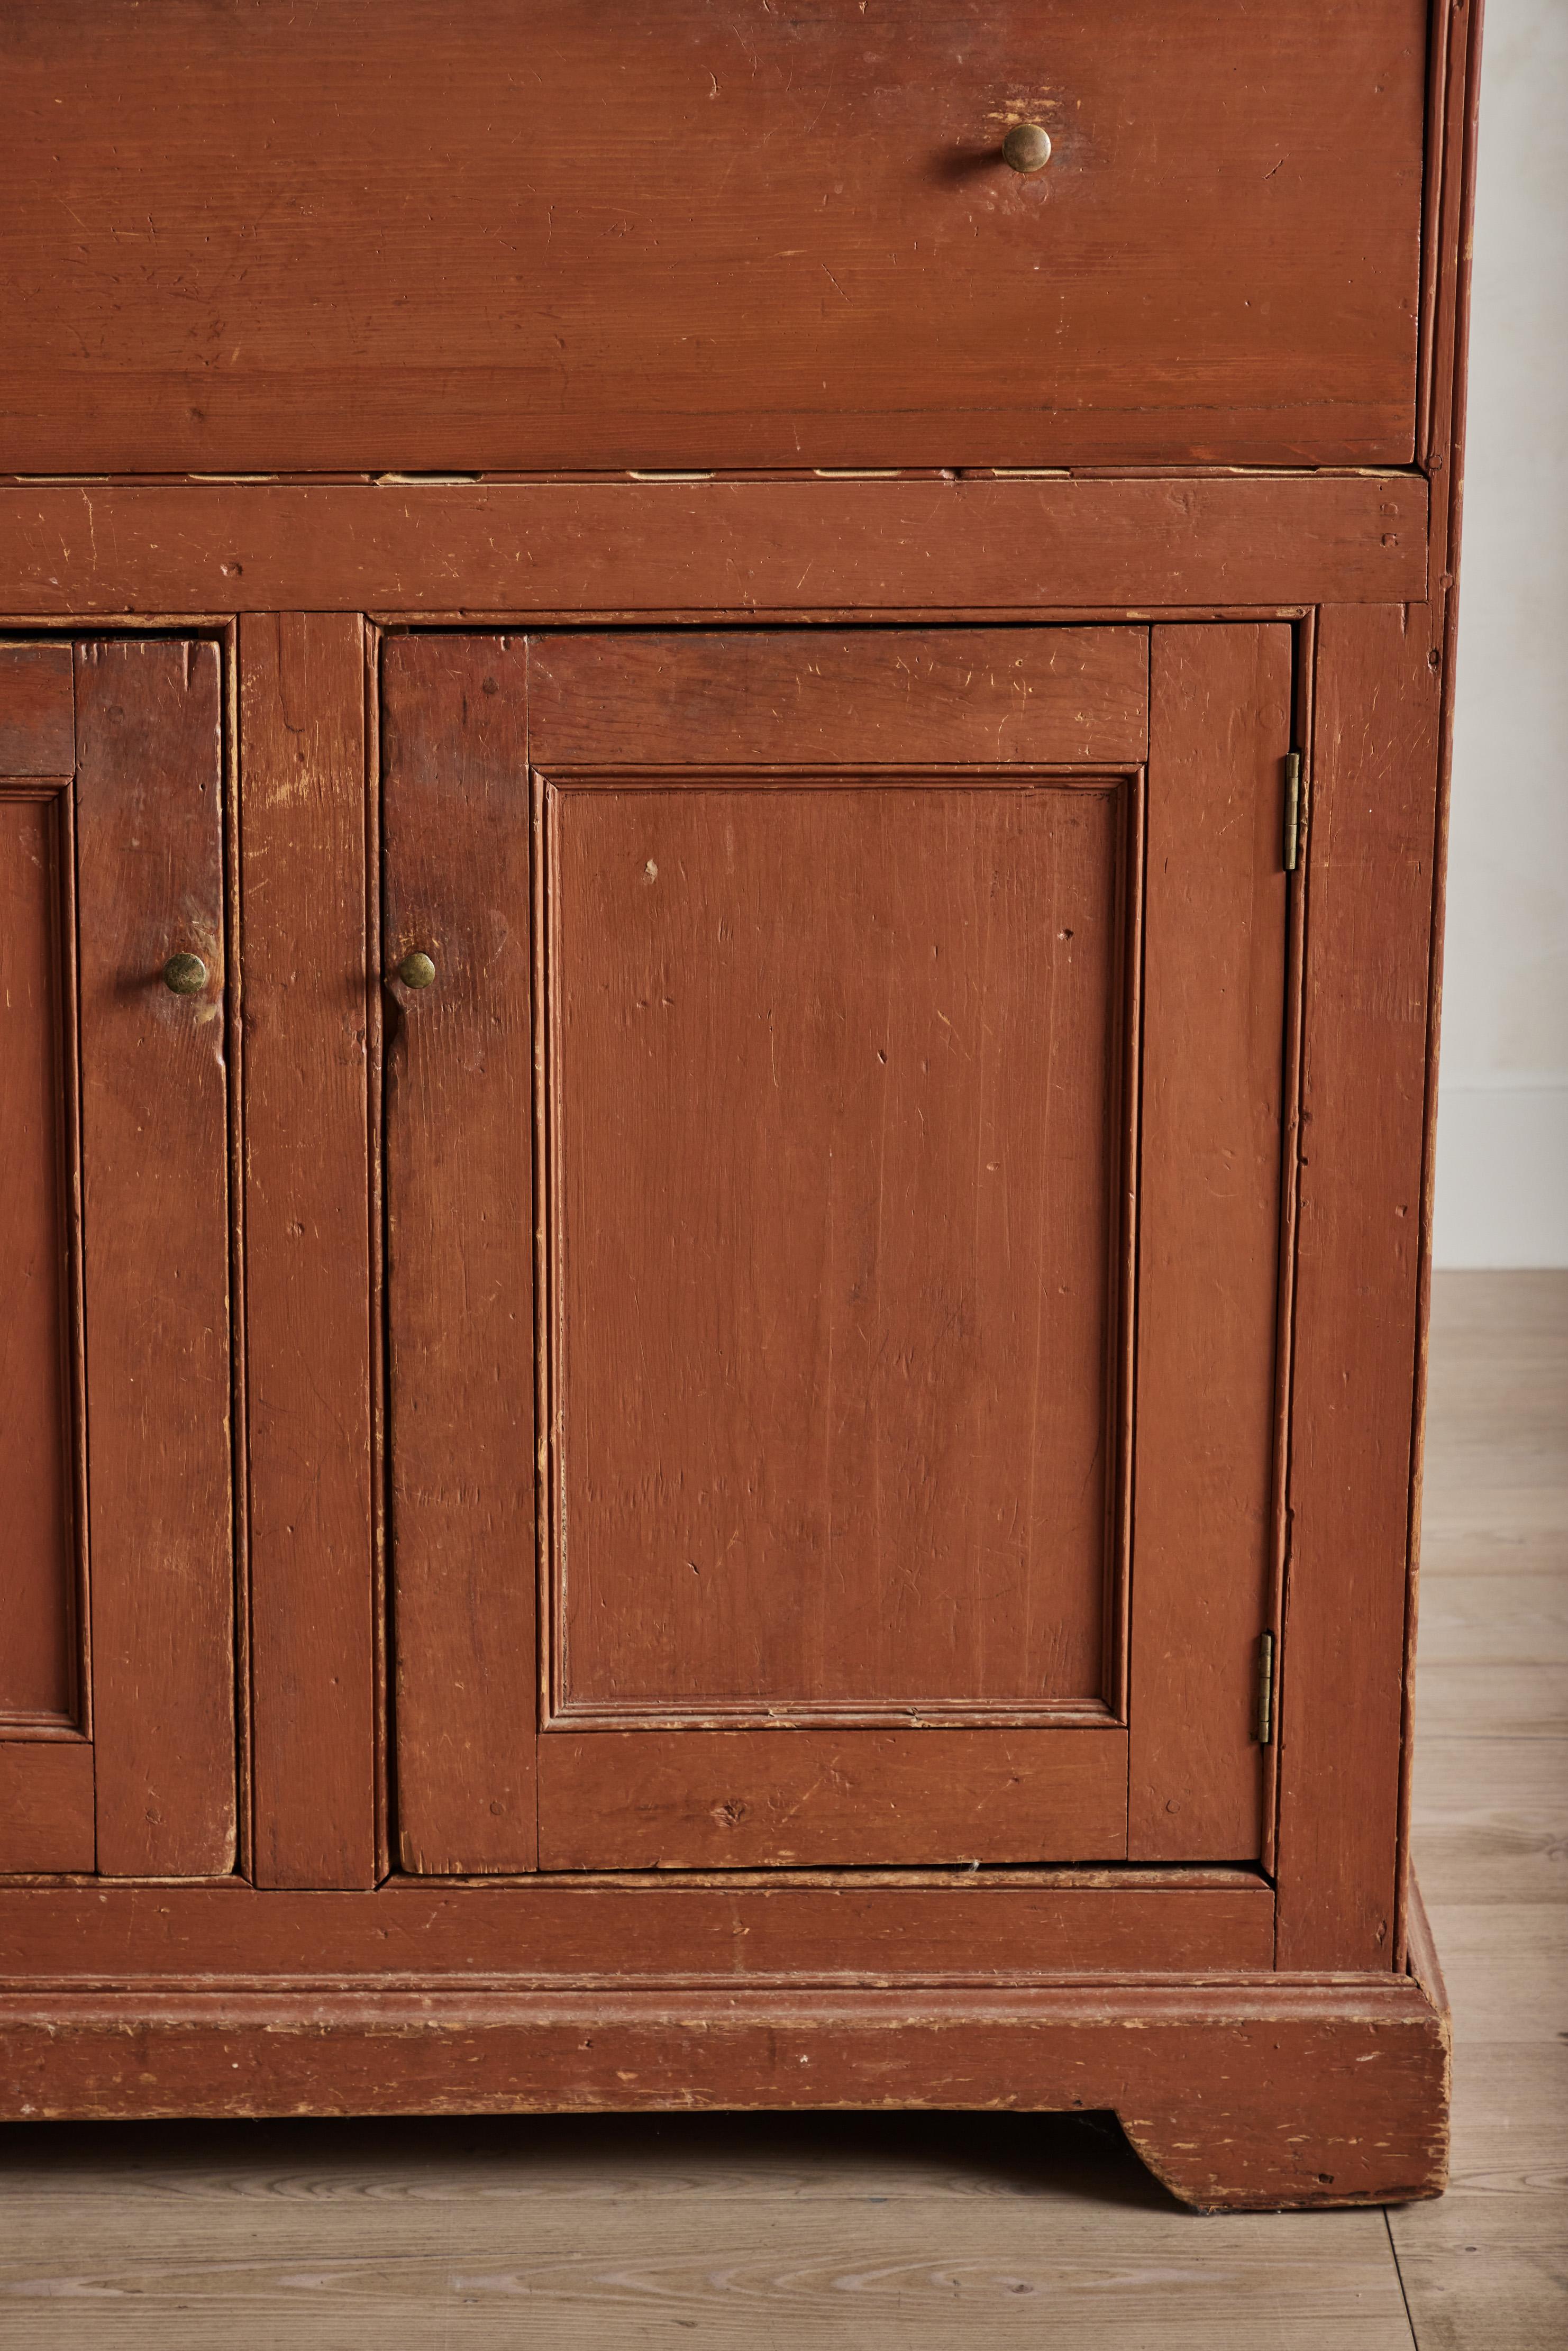 19th Century Persimmon Finish Rustic Sideboard